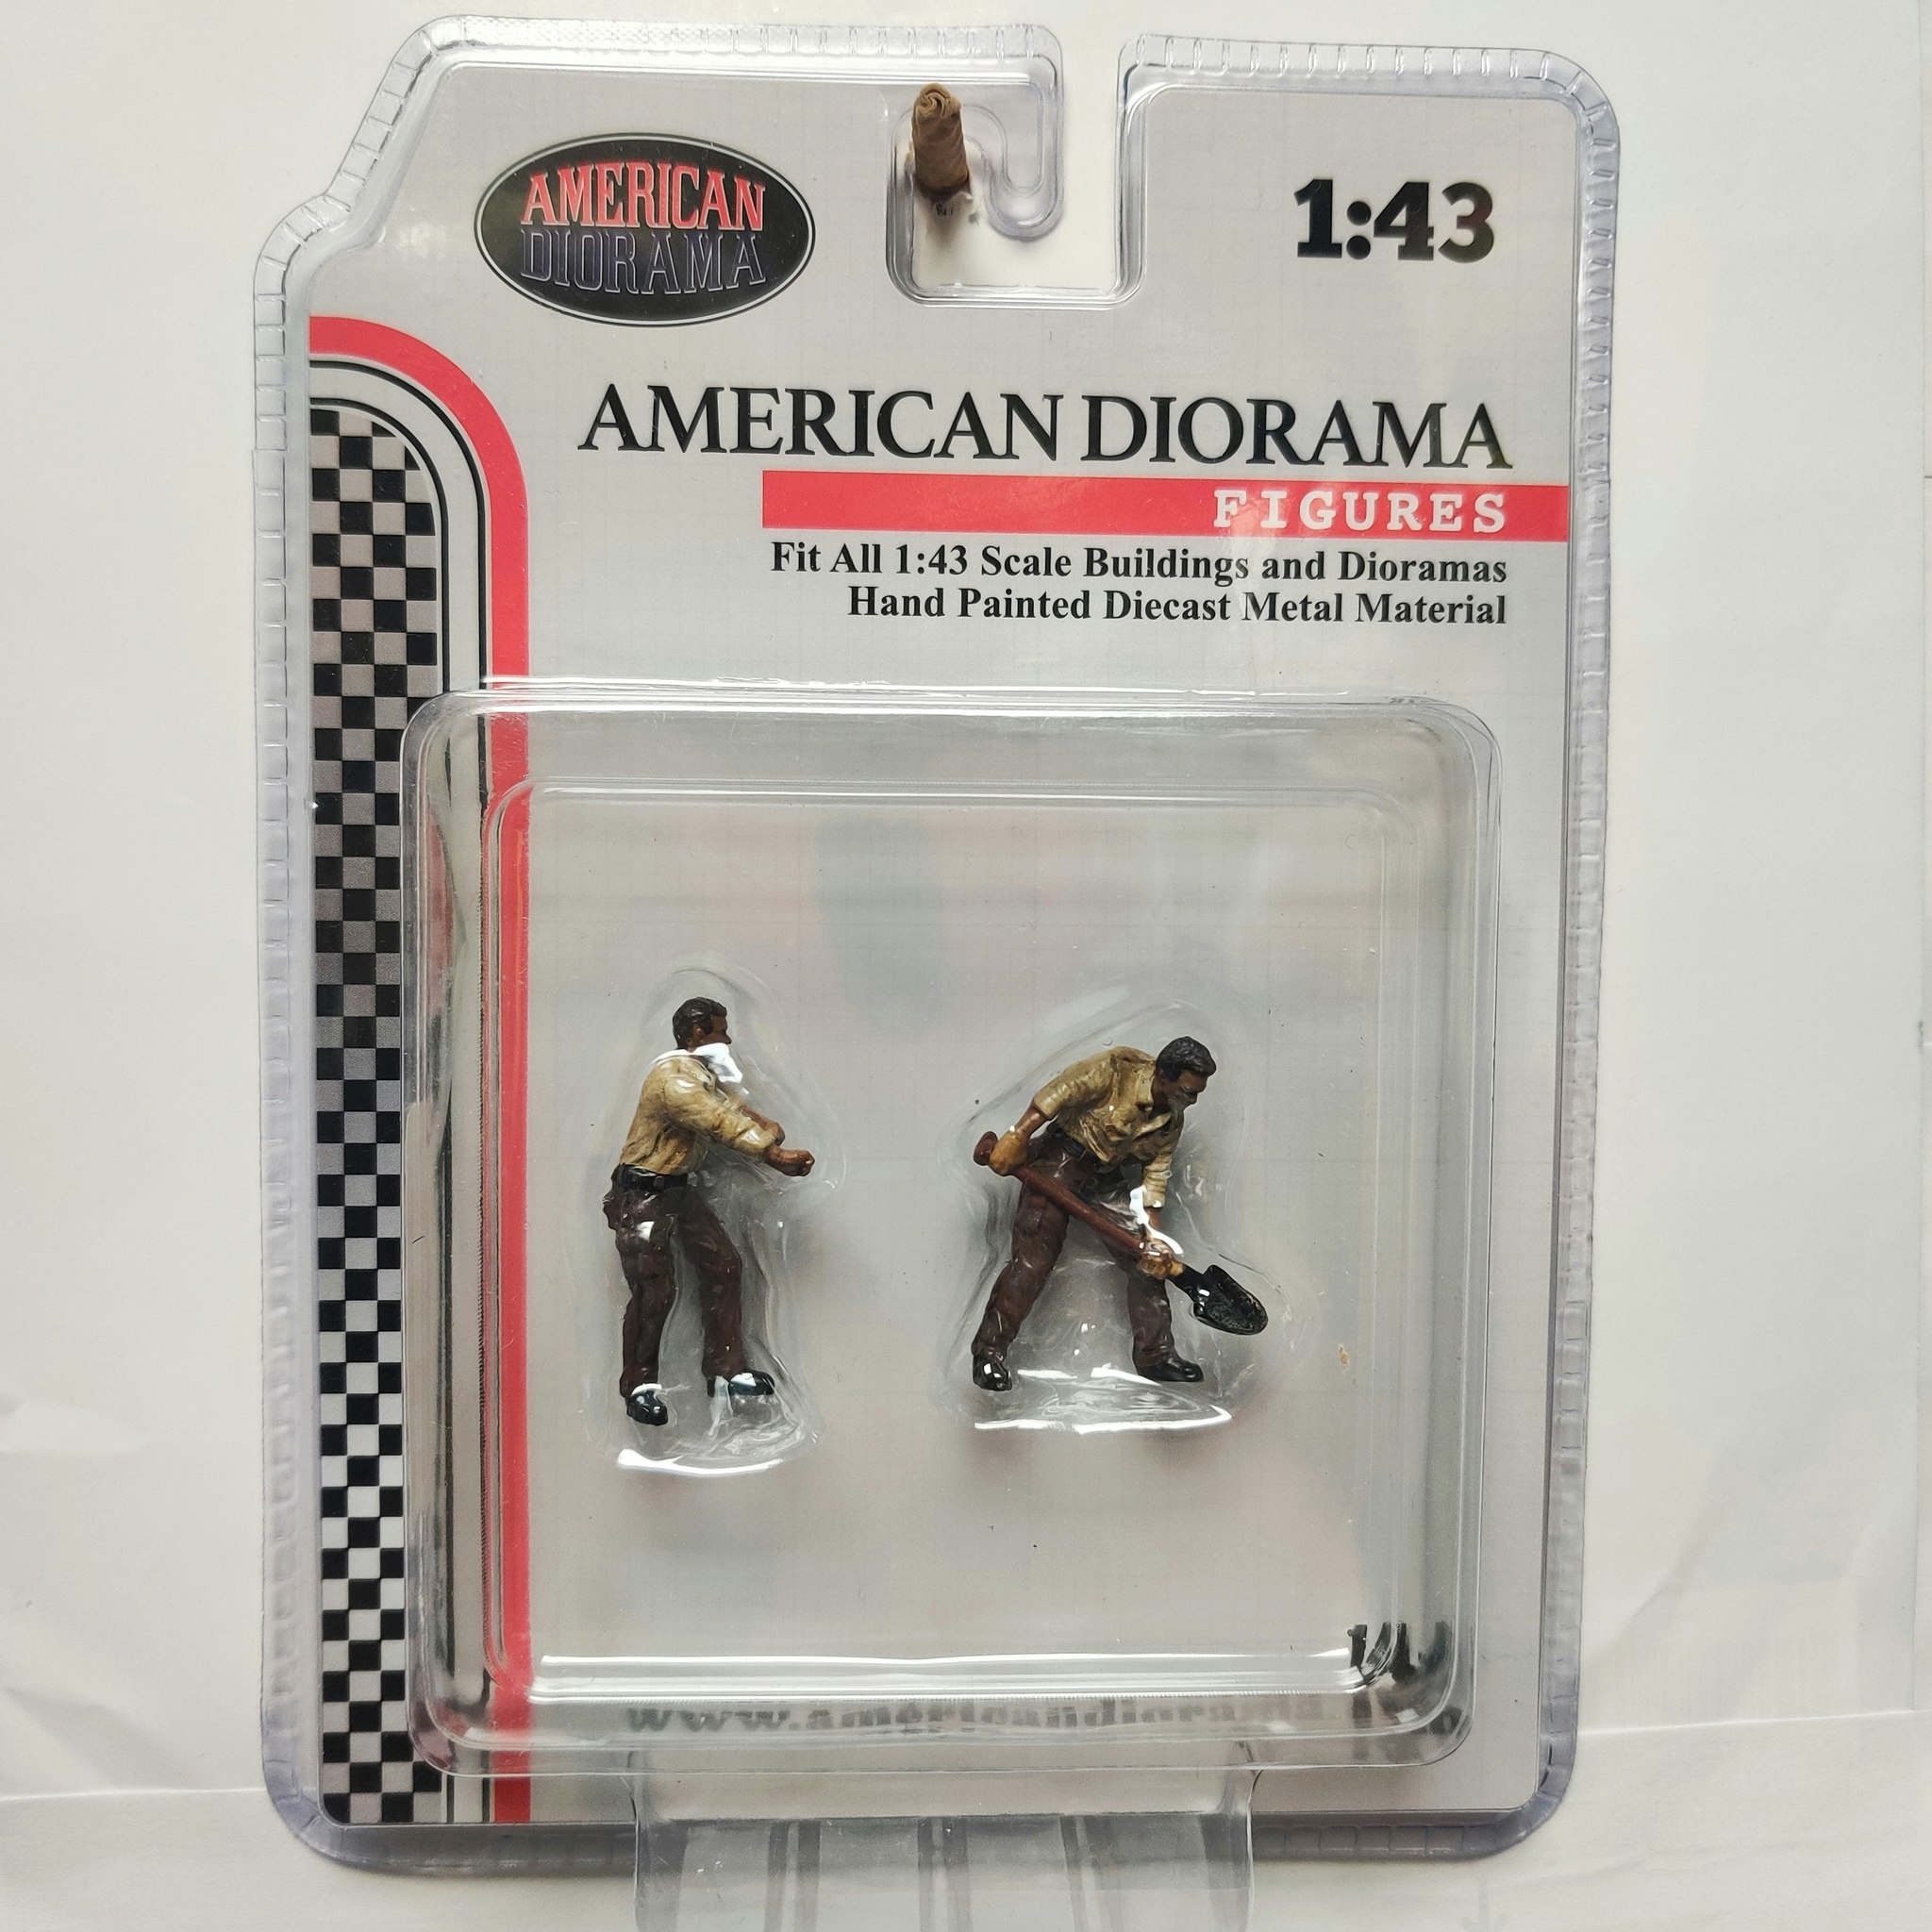 Skala 1/43, AD-43002 Mekaniker 4x4 Camel Trophy, 2 metal figures fr American Diorama